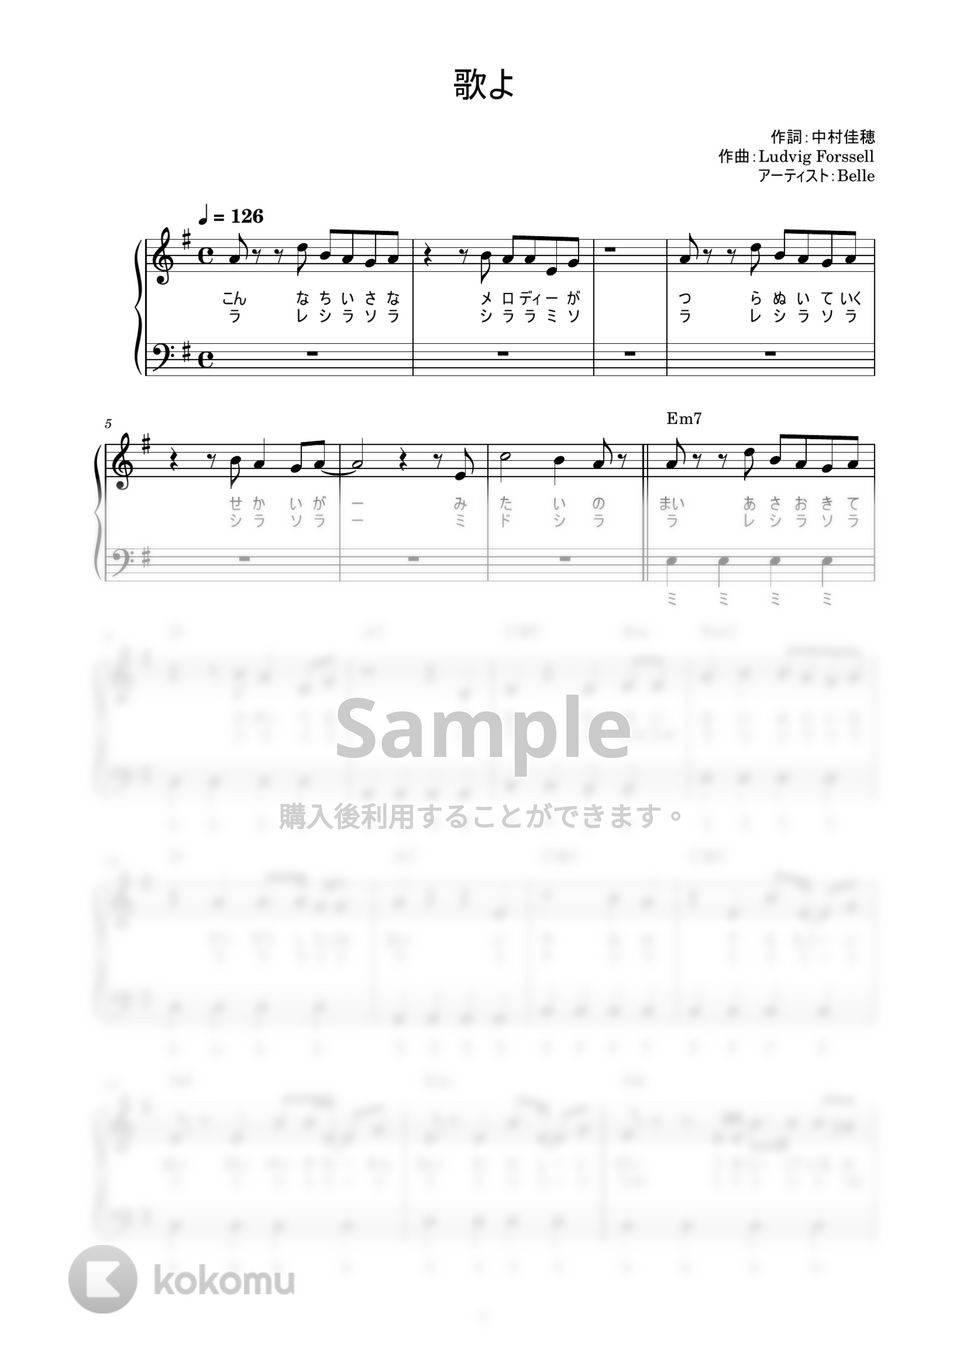 Belle - 歌よ (かんたん / 歌詞付き / ドレミ付き / 初心者) by piano.tokyo